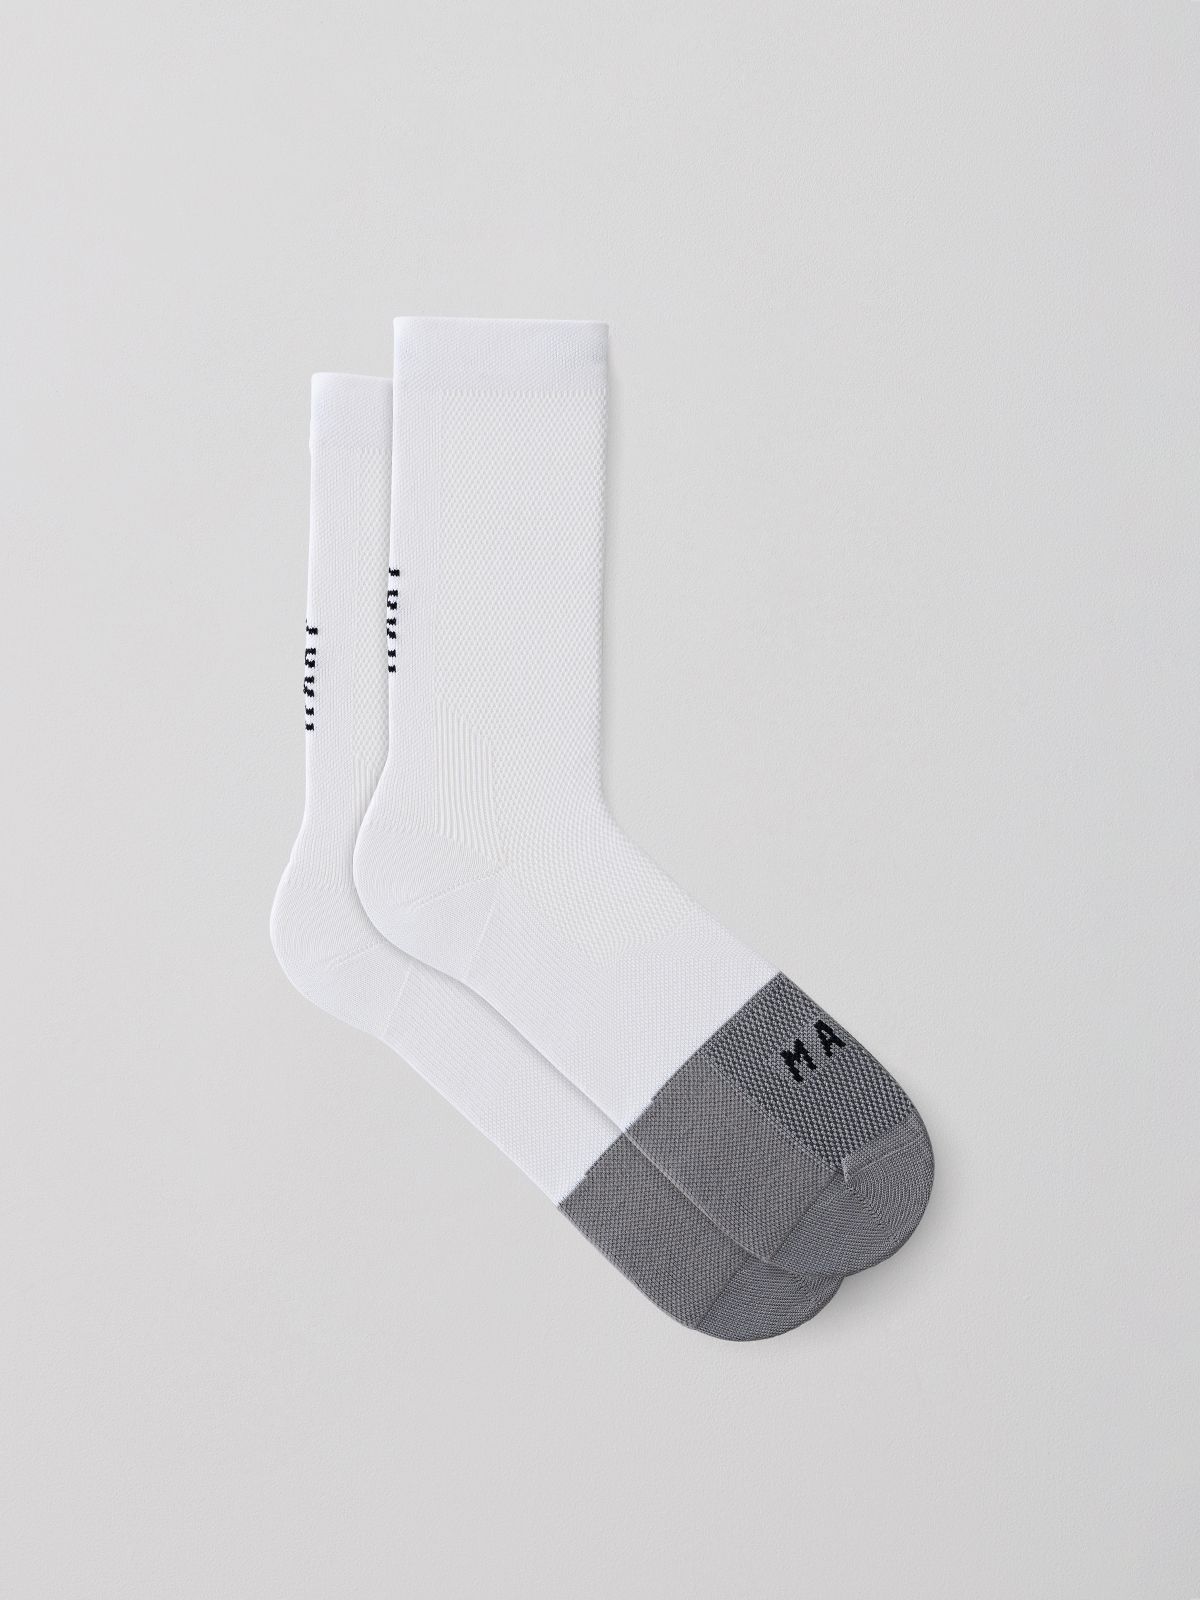 Division Sock (White/Grey)